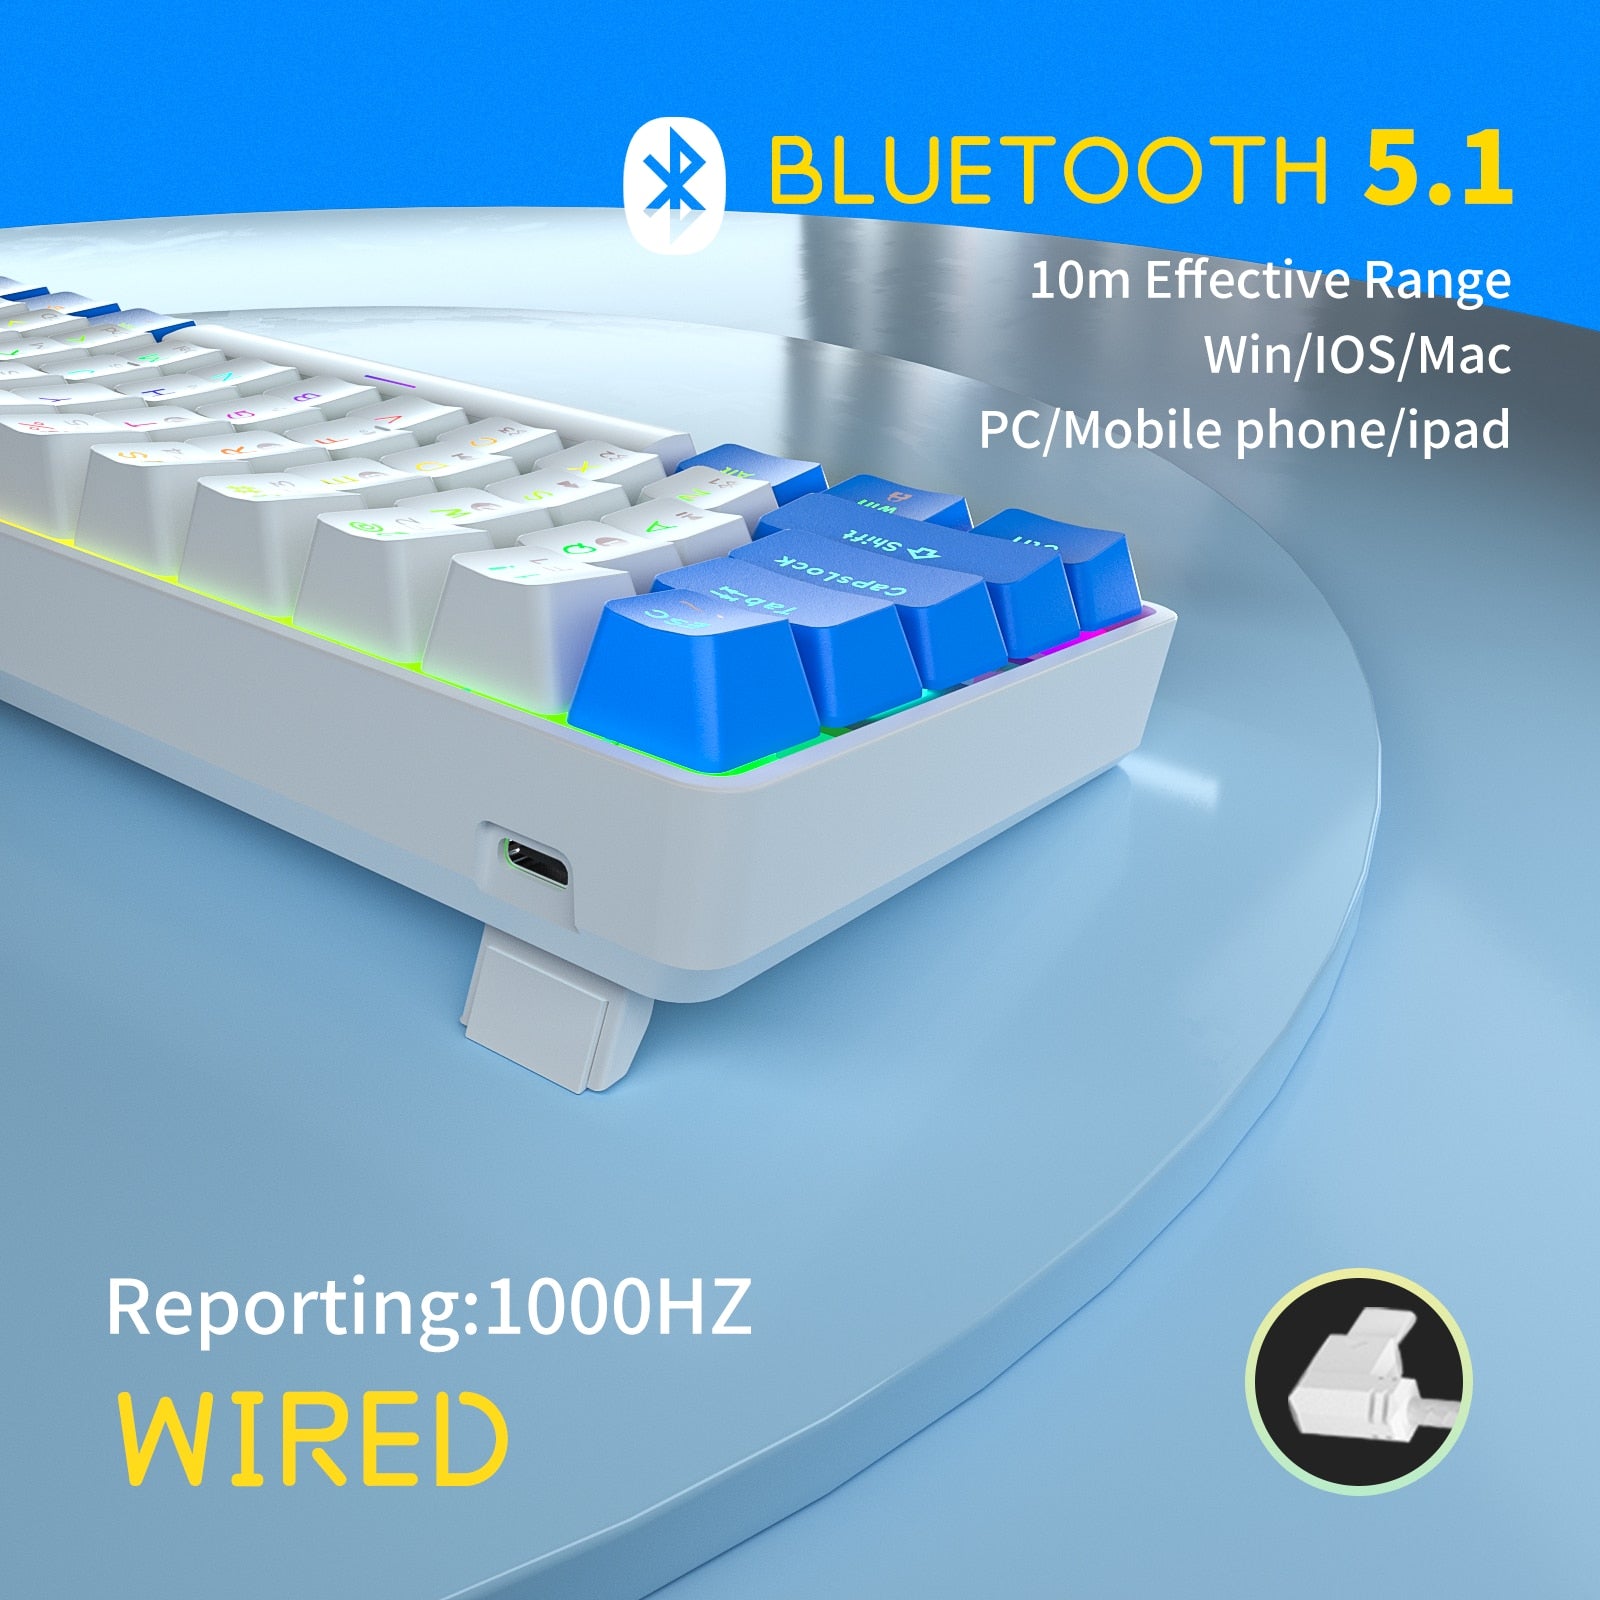 TMKB GK61 60% Bluetooth  Mini Mechanical Gaming Keyboard